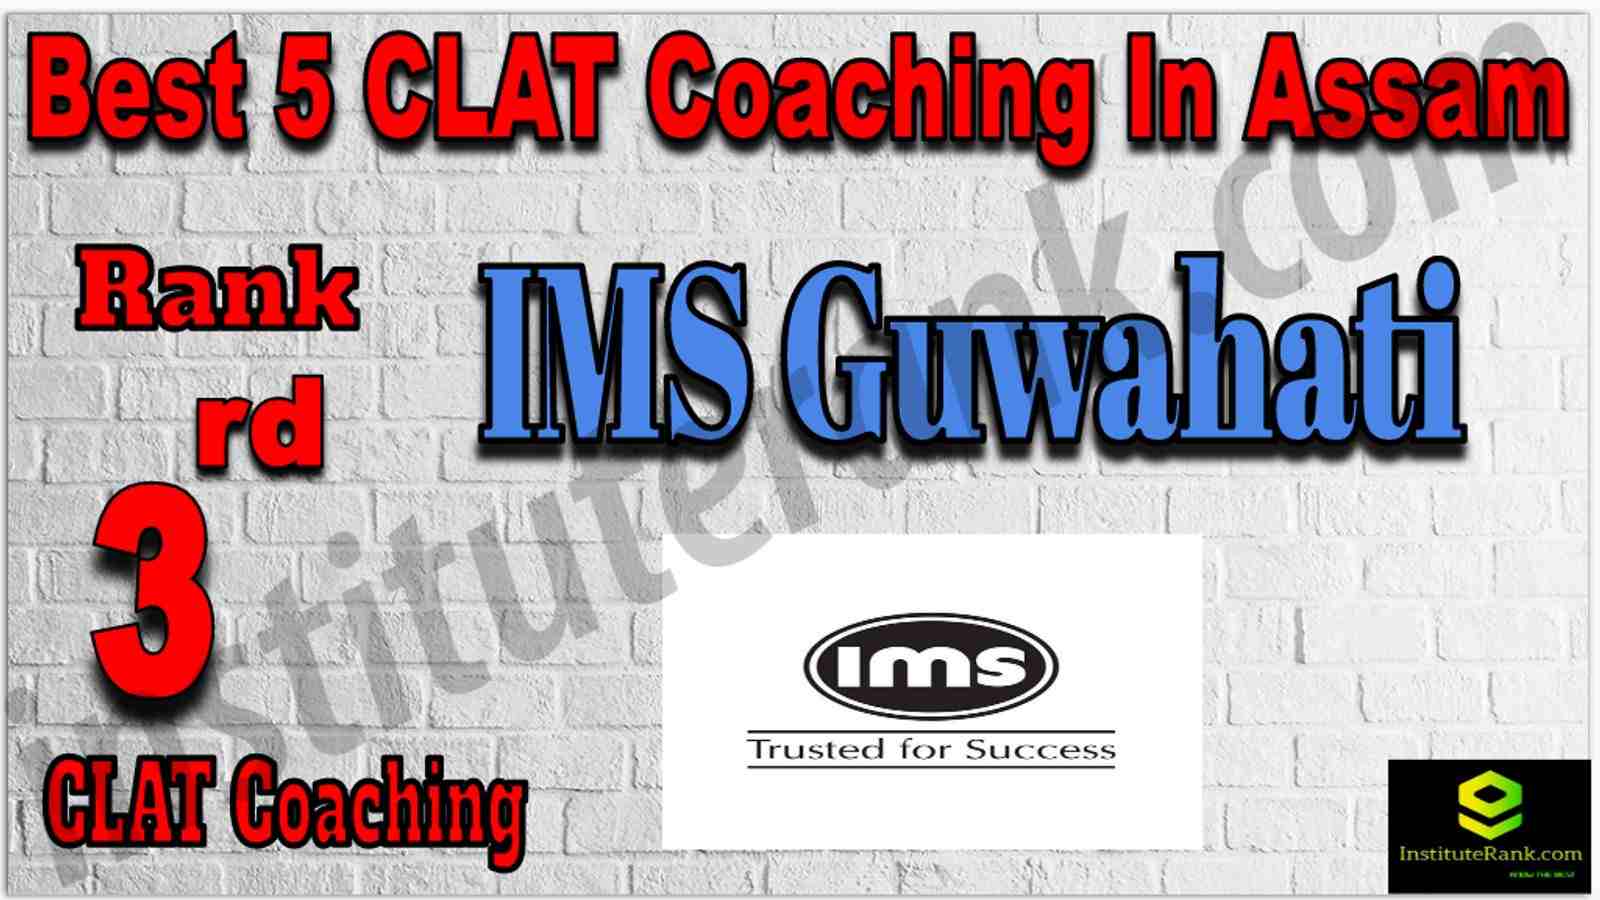 Rank 3rd Best 5 CLAT Coaching In Assam